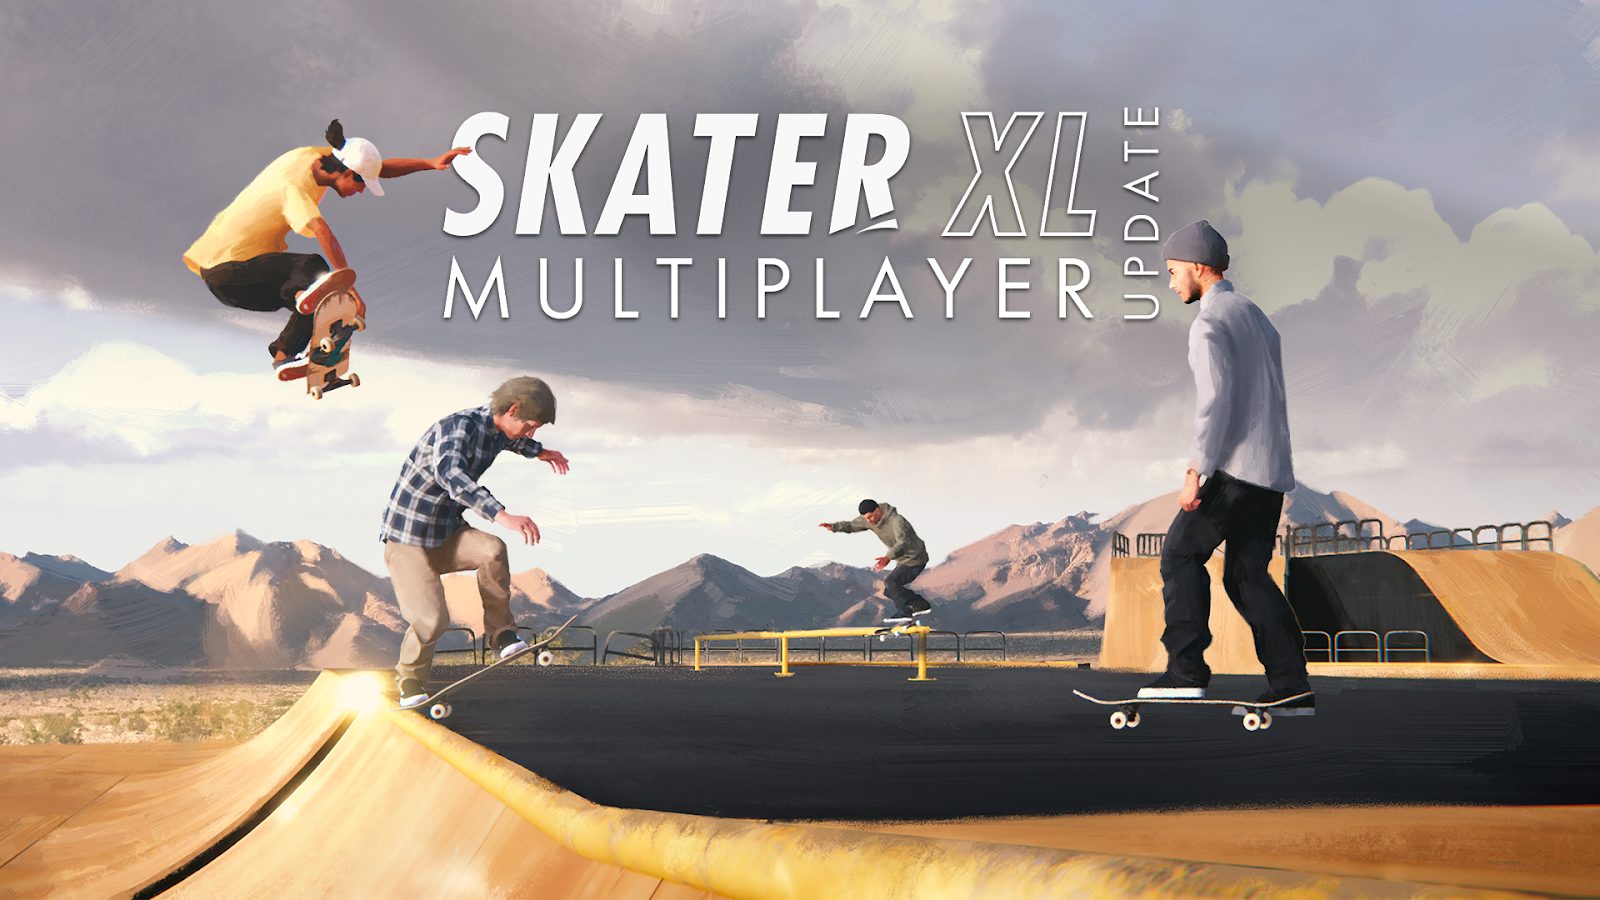 Multiplayer Free Skate Available Now! Skater XL